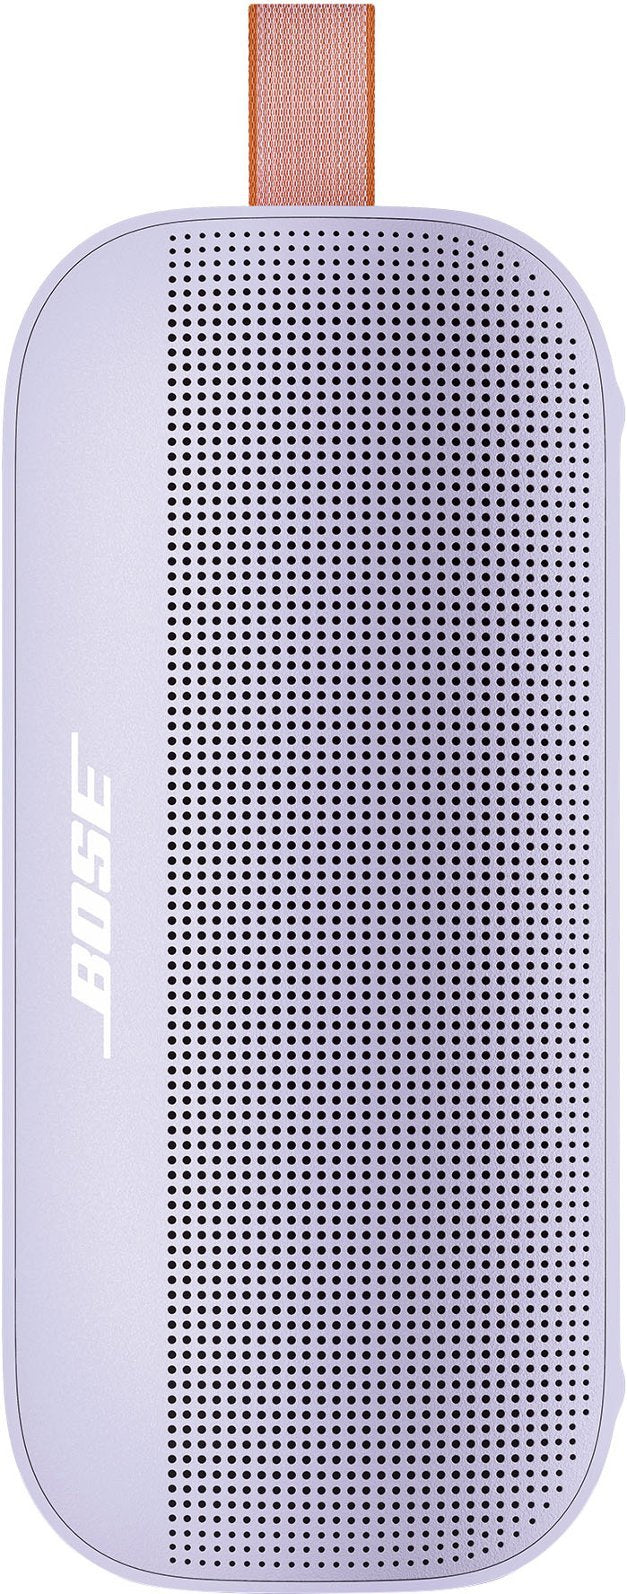 Bose SoundLink Flex Portable Bluetooth Speaker with Waterproof/Dustproof Design